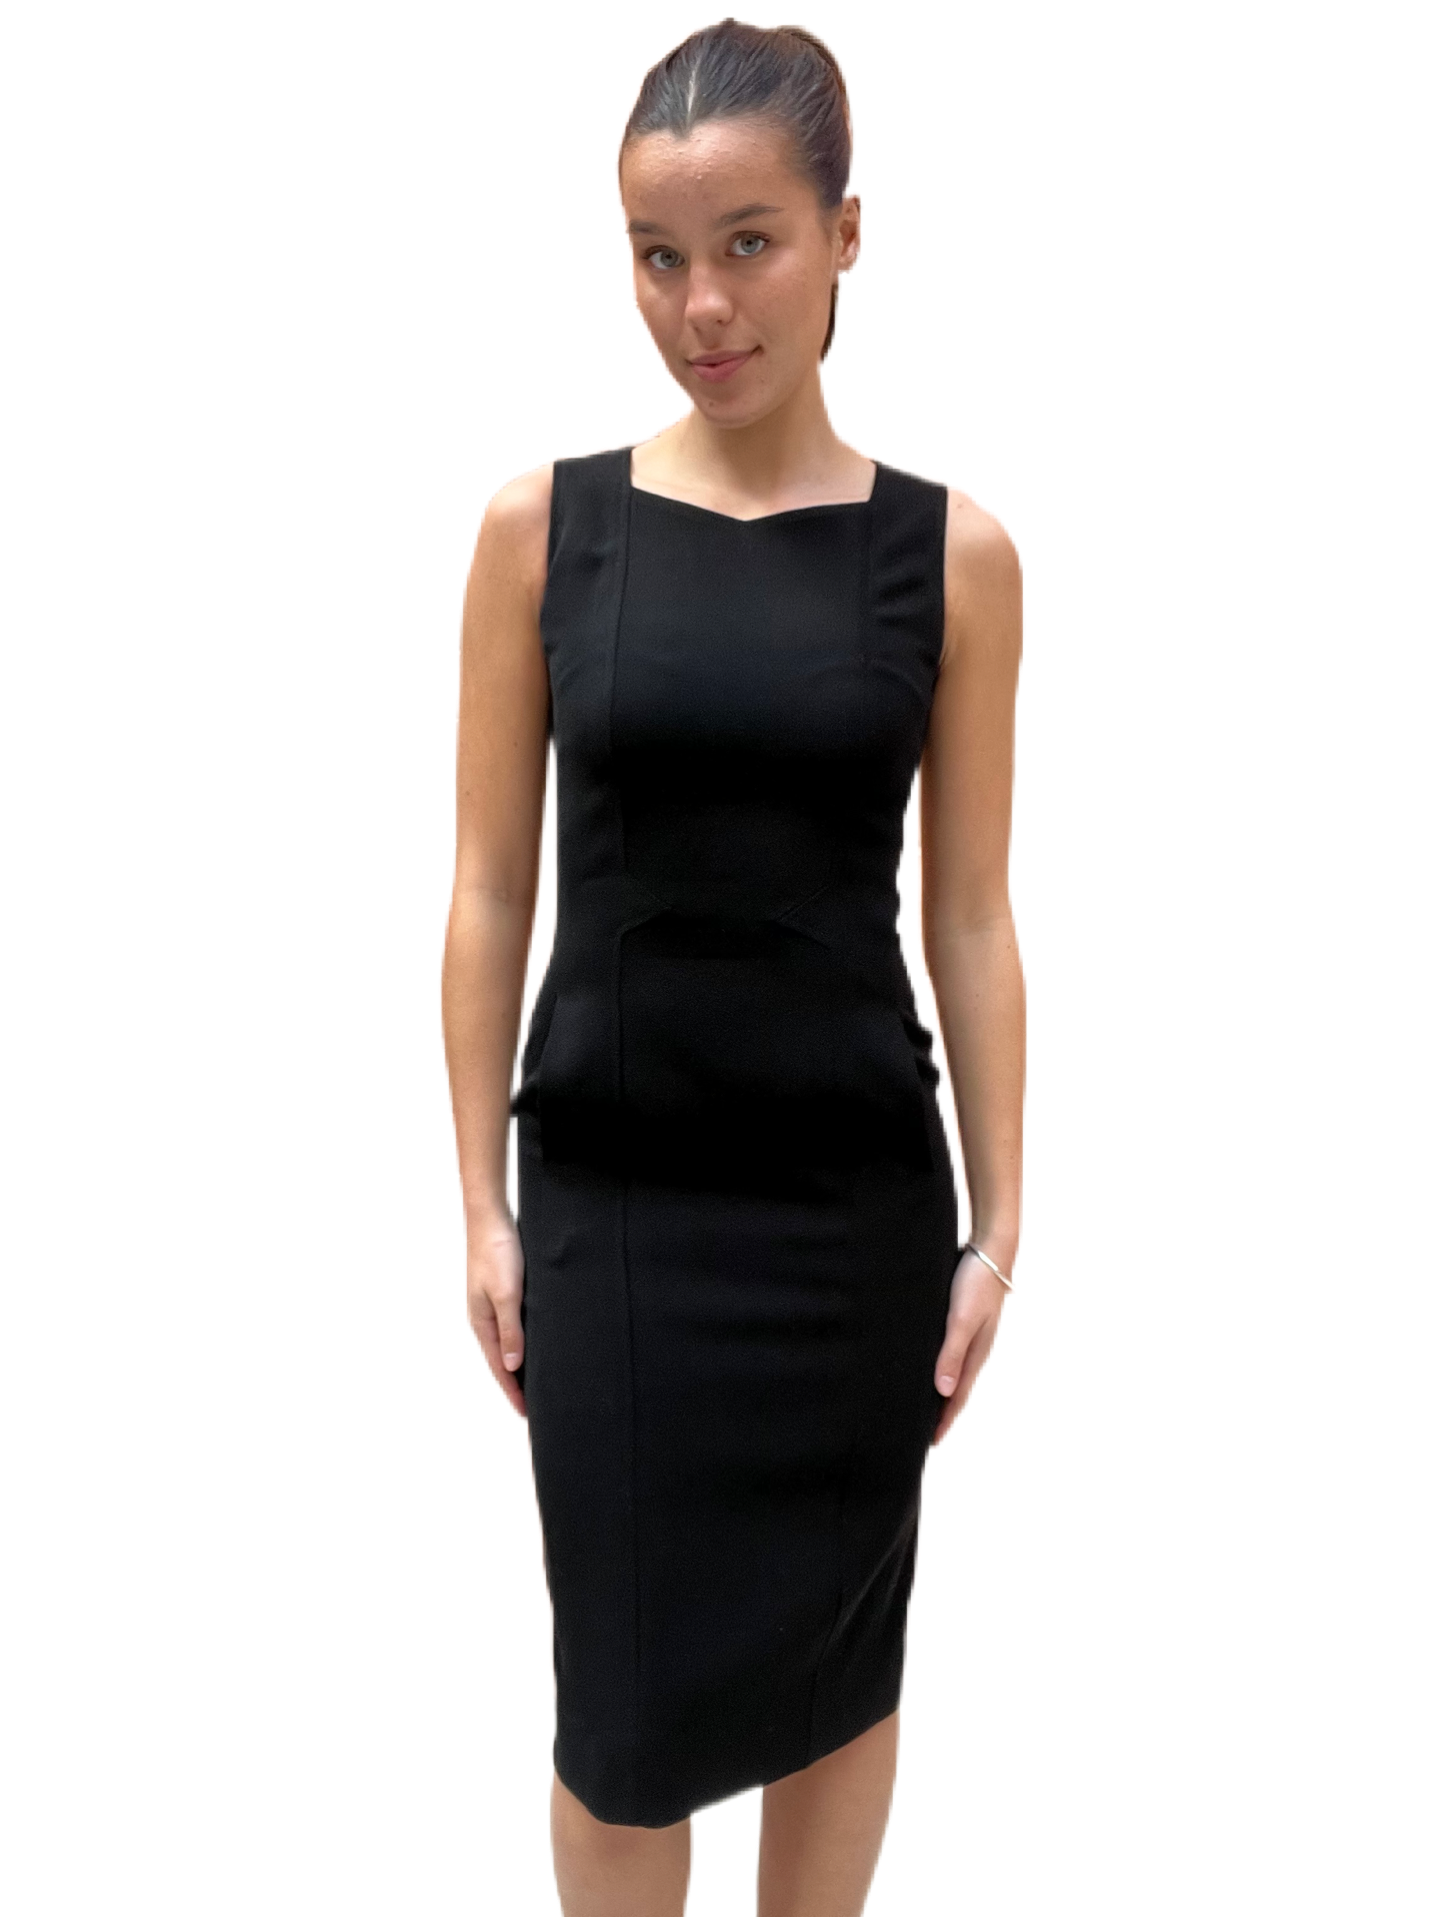 Chanel Black Dress. Size: 36